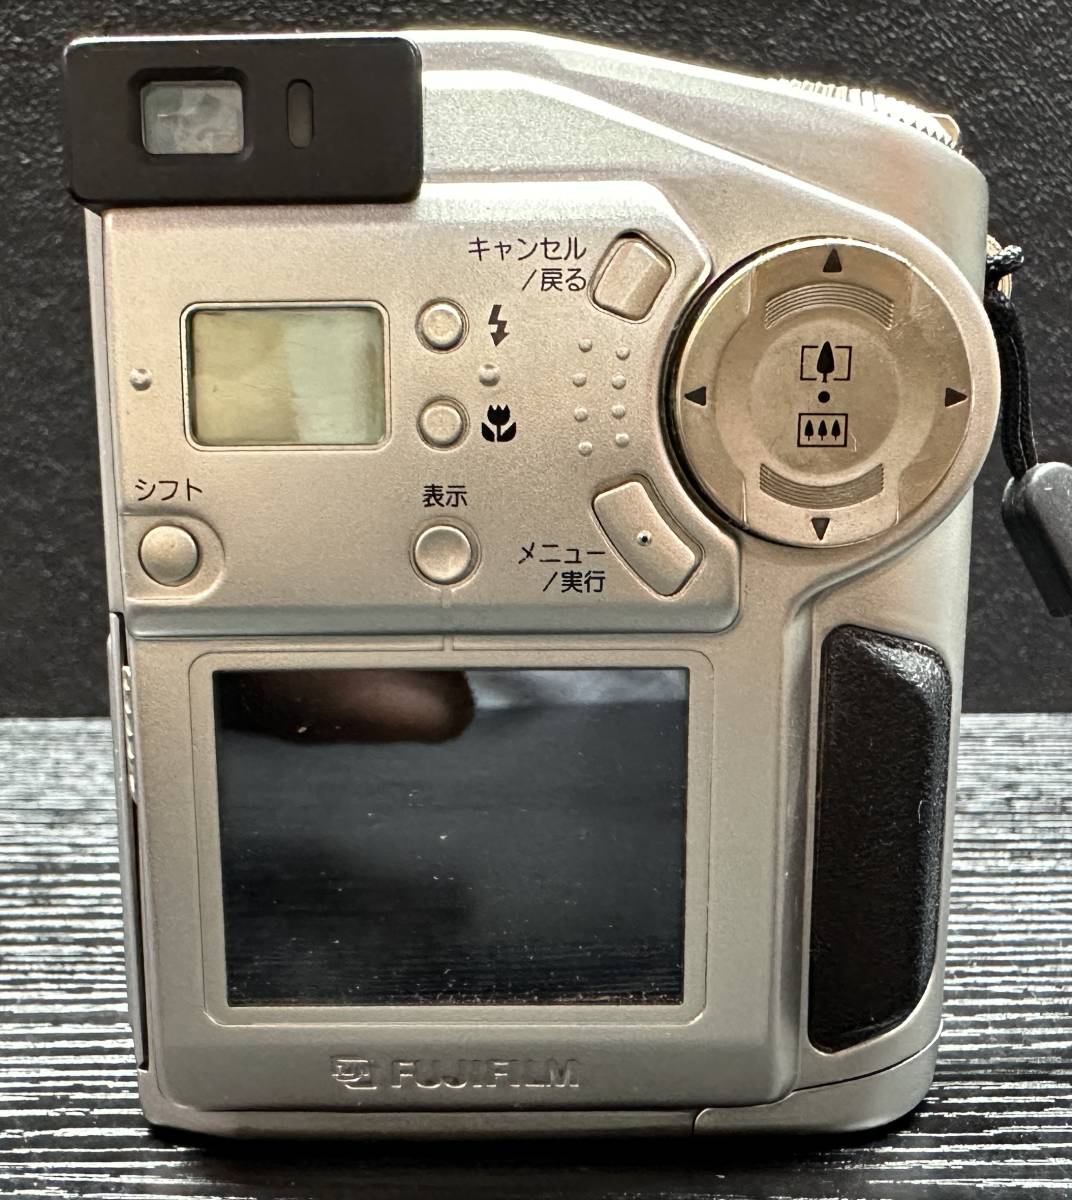 FUJIFILM Fine Pix 1700Z 1.5 MEGA PIXELS 富士フイルム デジカメ / FUJINON ZOOM LENS f=6.6-19.8mm コンパクト デジタルカメラ #1948_画像5